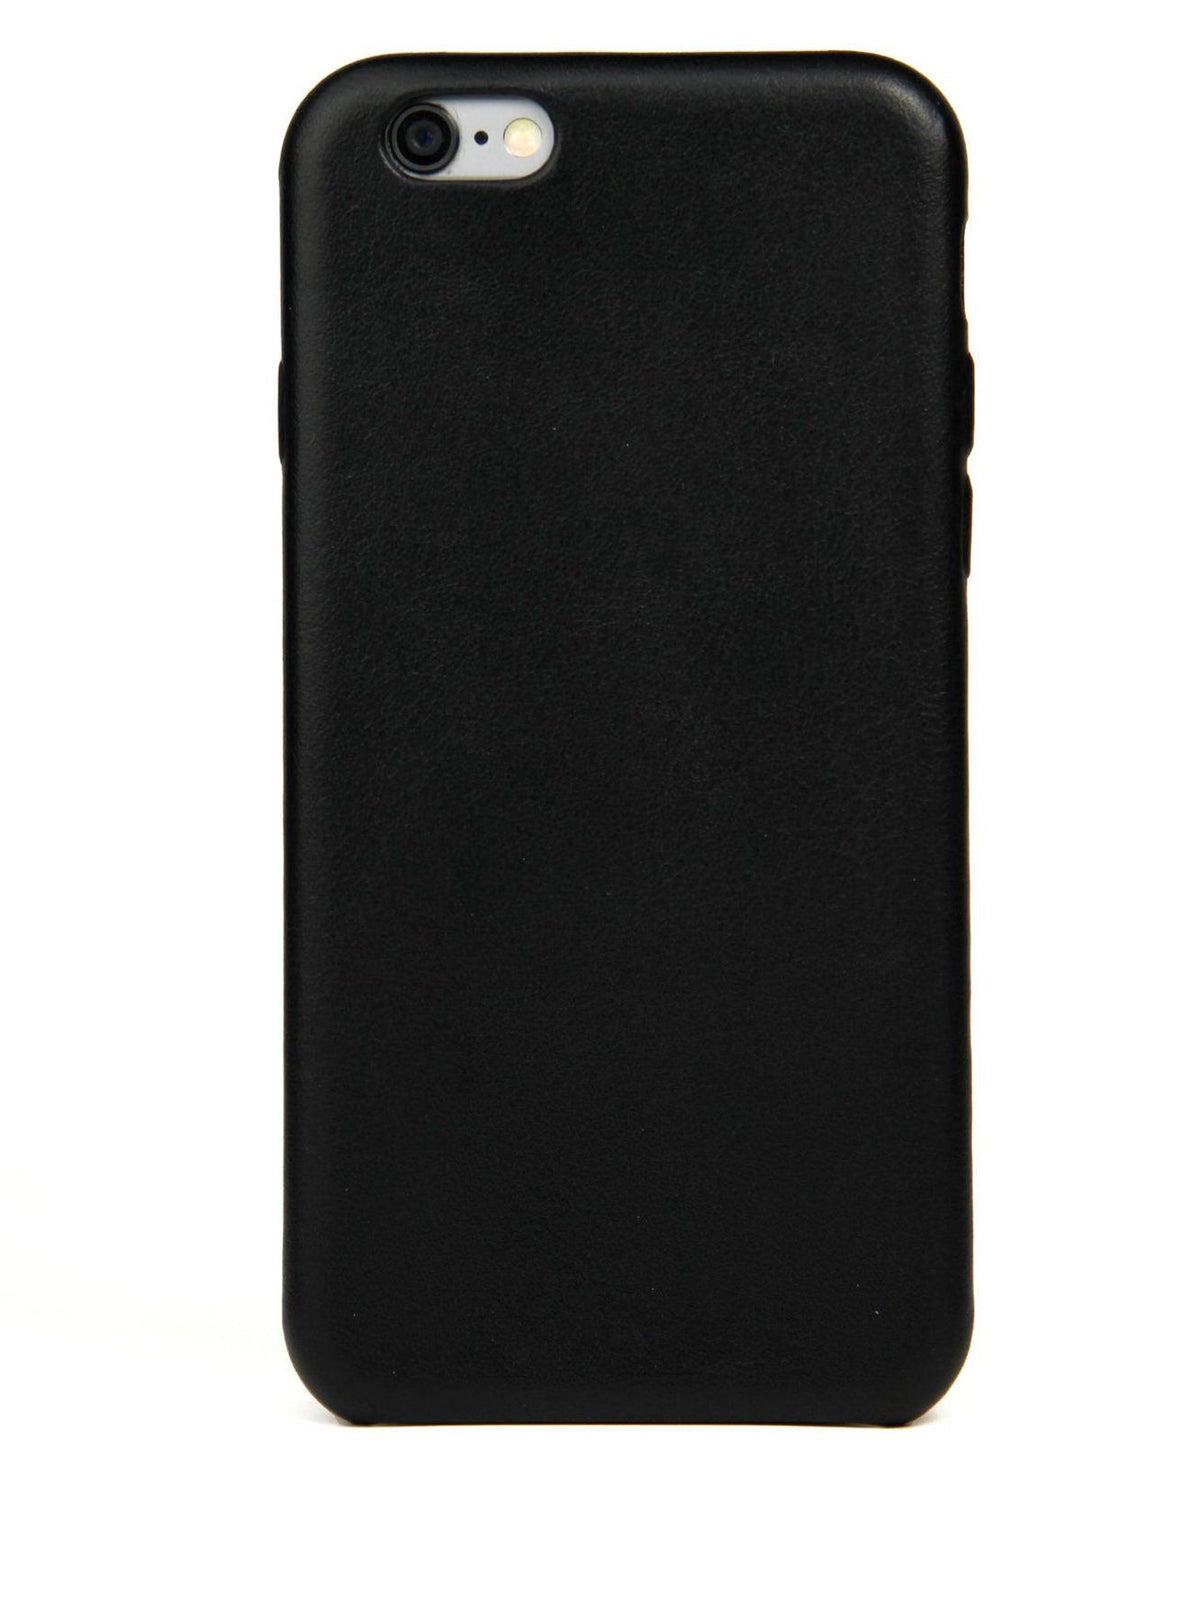 iPhone 6 Case, Black Leather